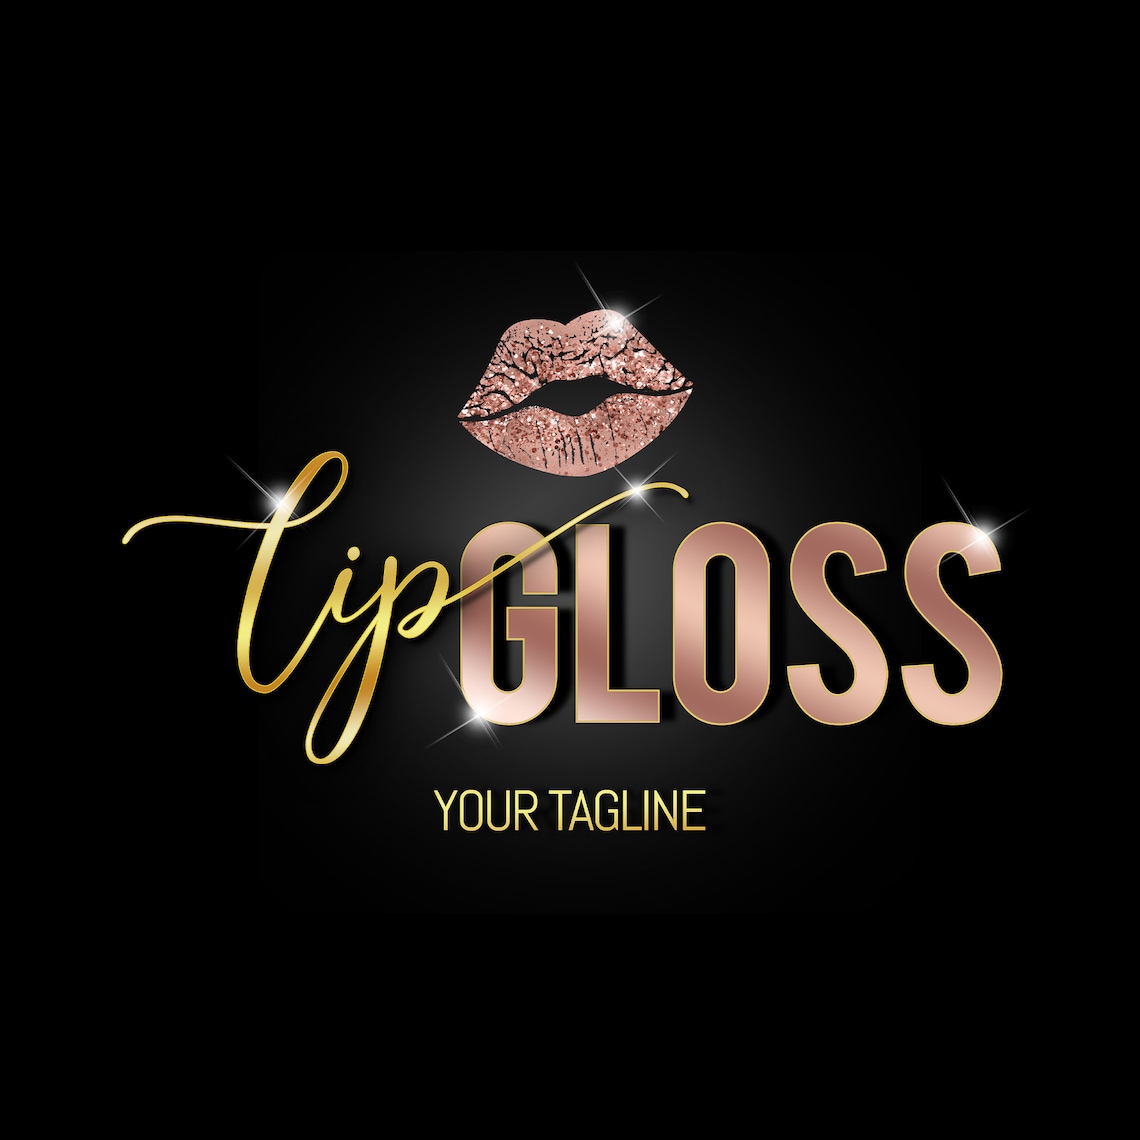 lip gloss logo ideas 1